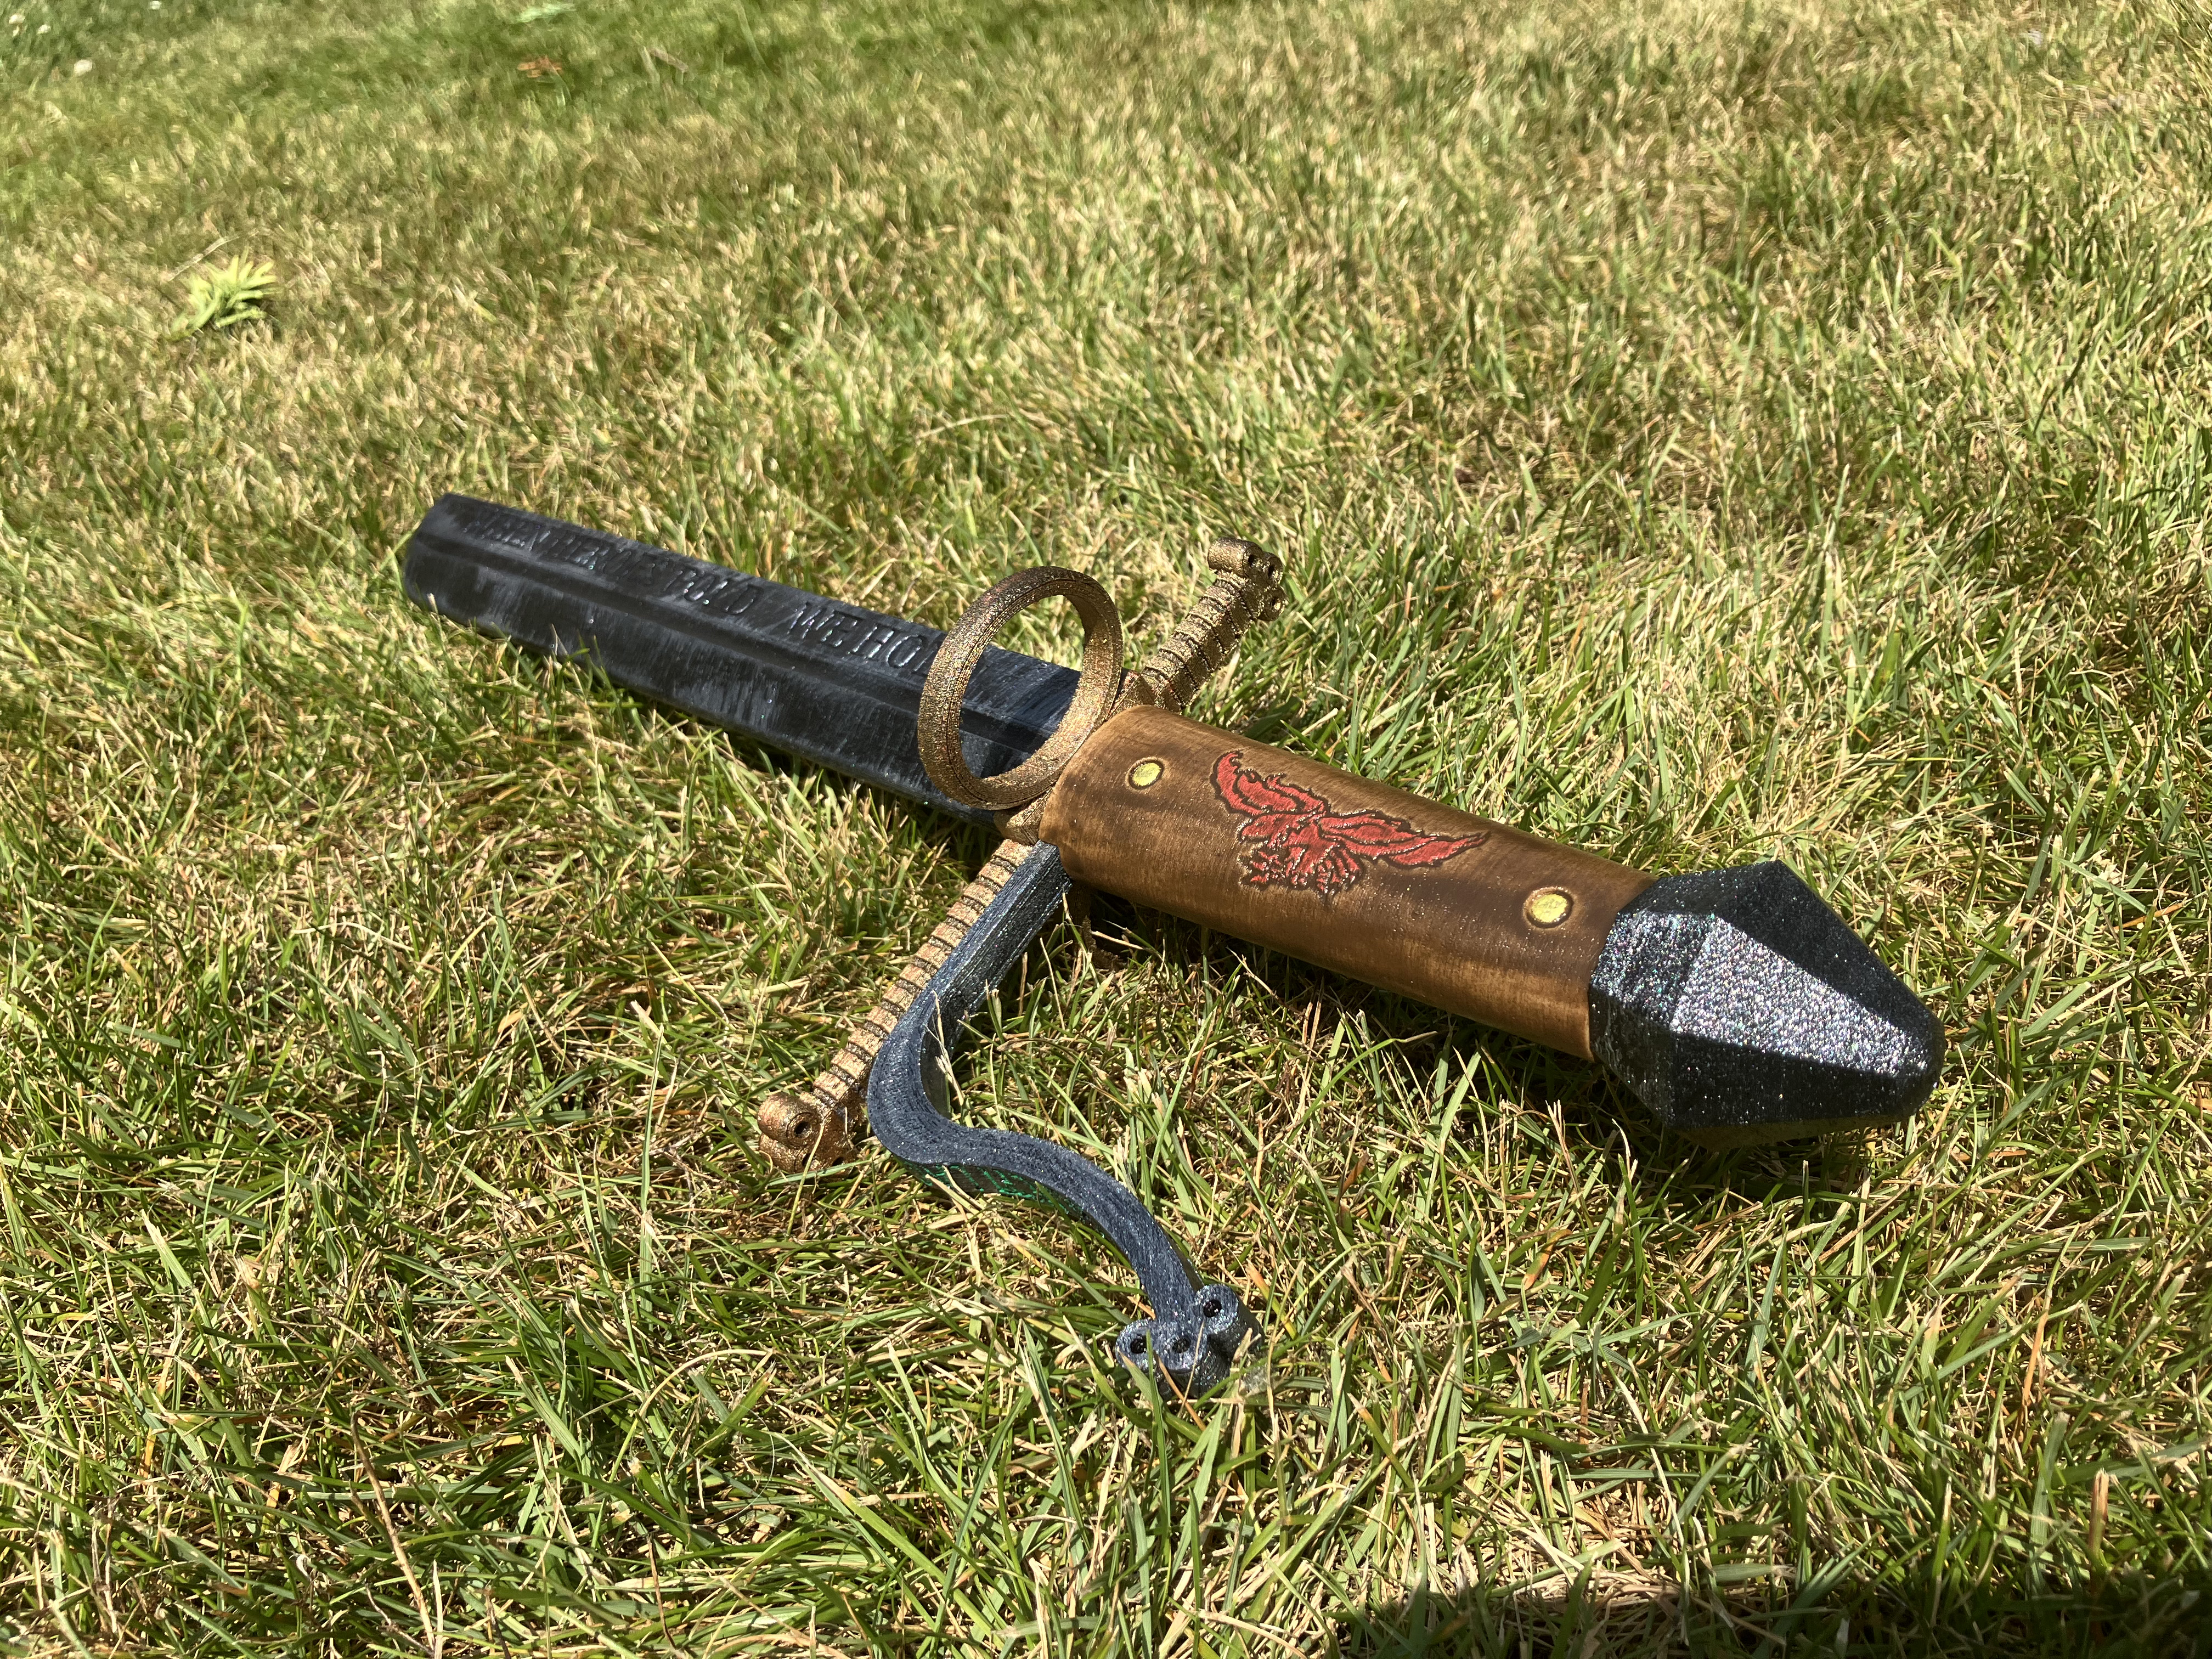 3D printed LARP safe parrying dagger